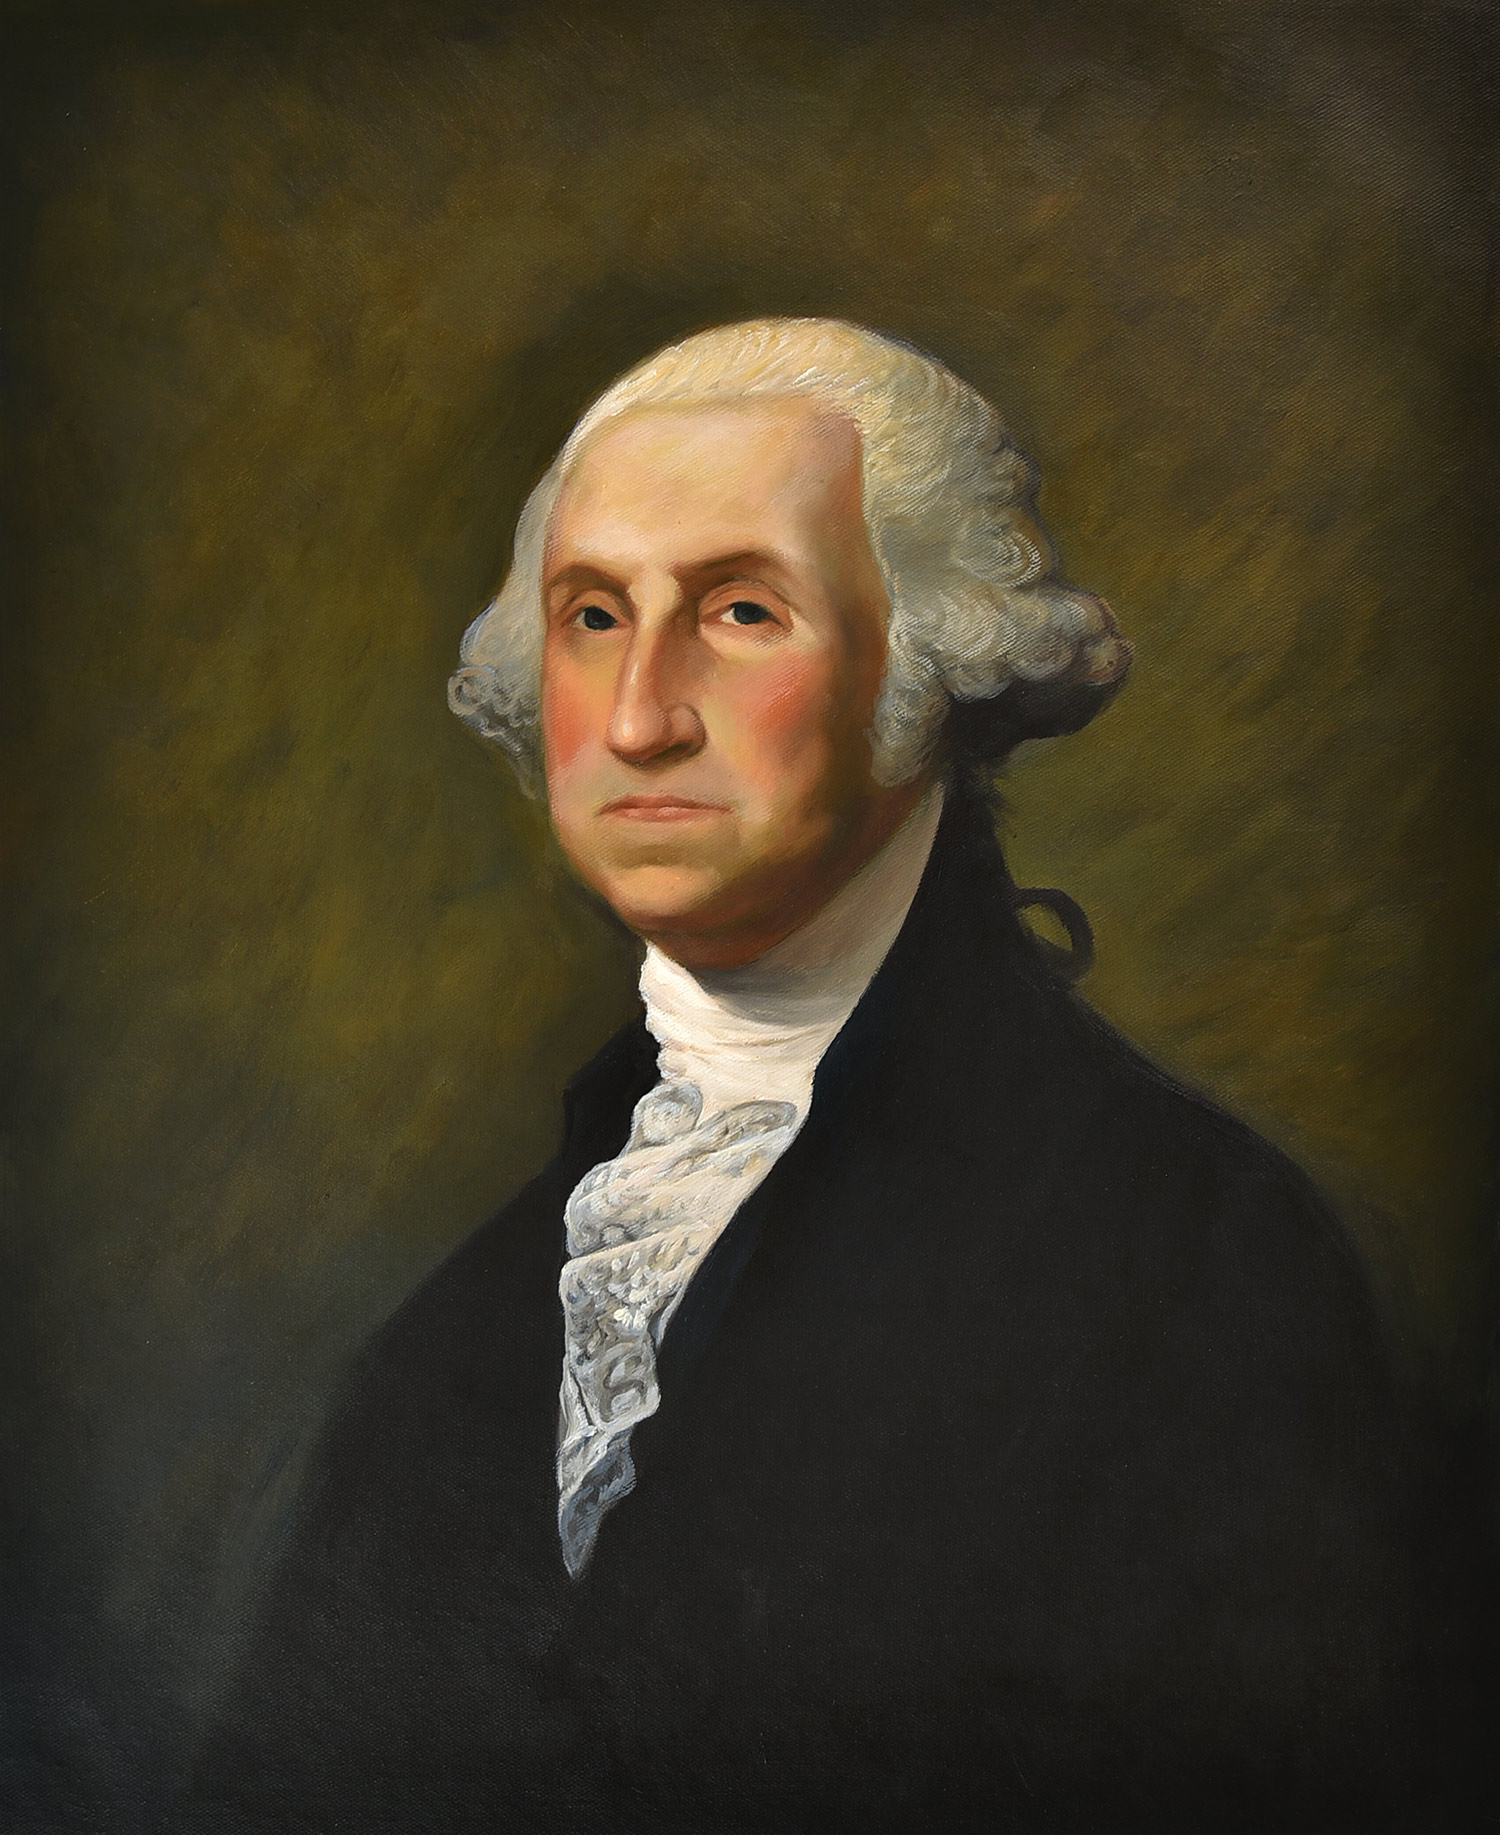 American President- George Washington